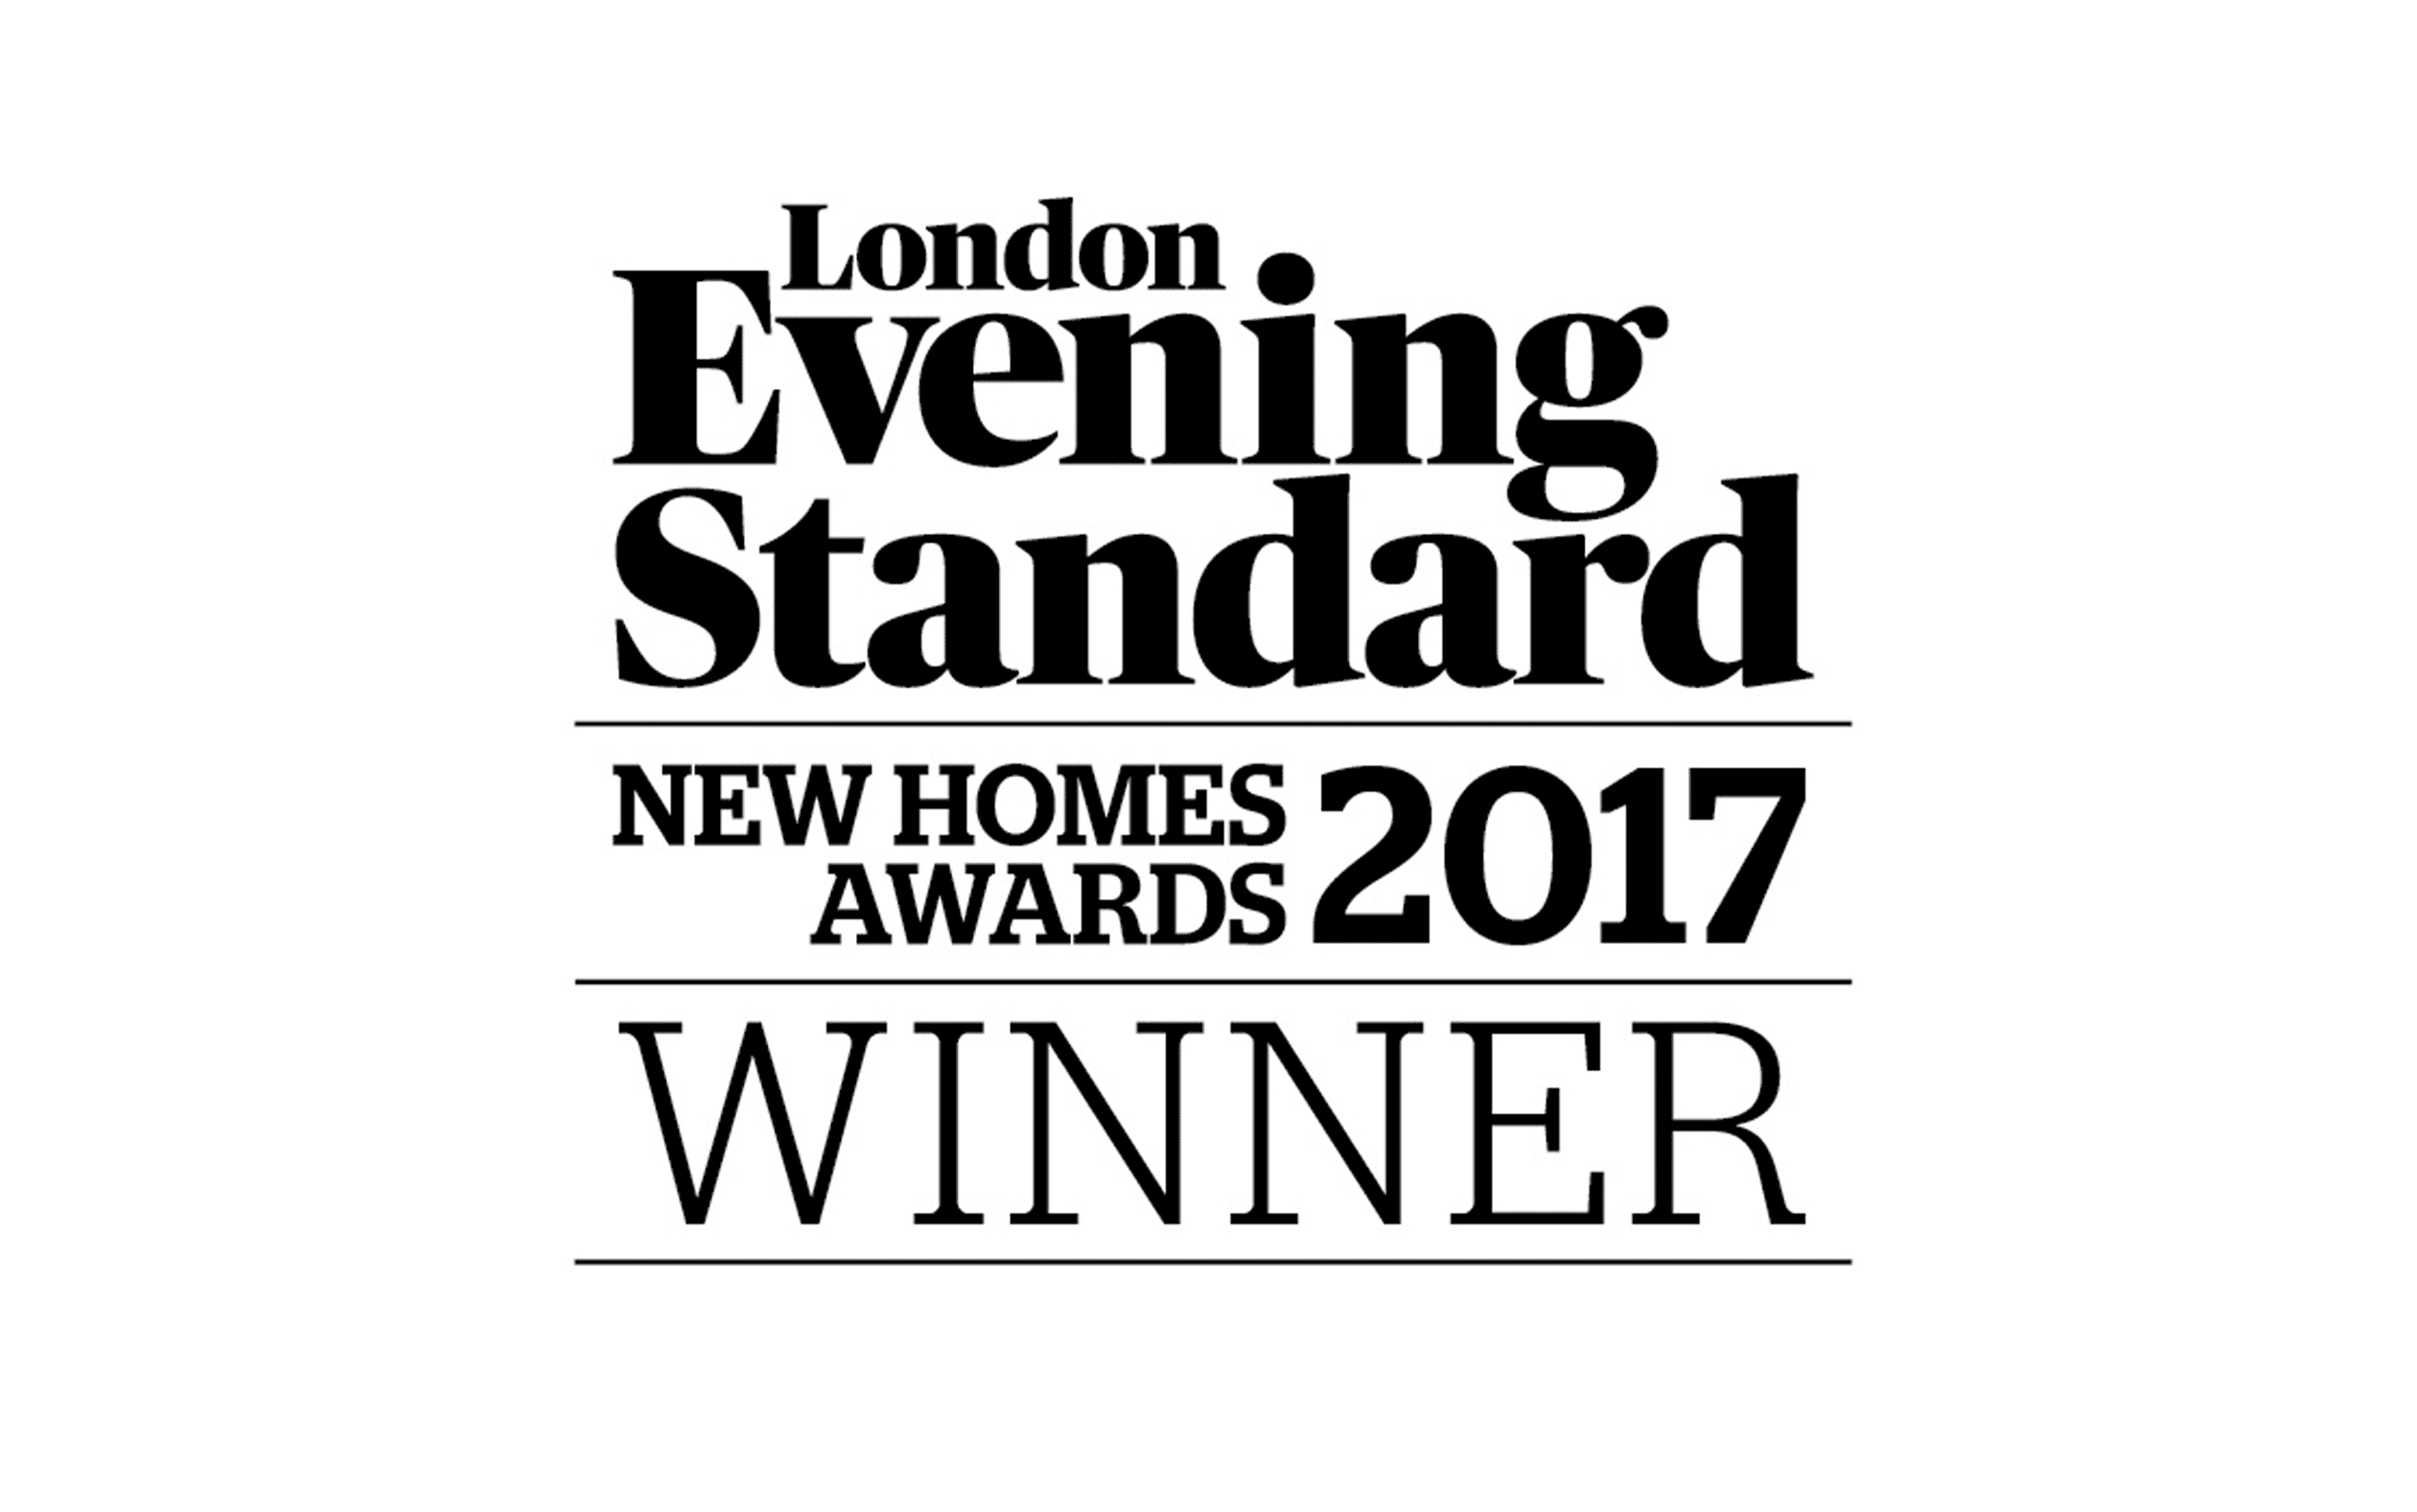 London Evening Standard New Homes Awards 2017